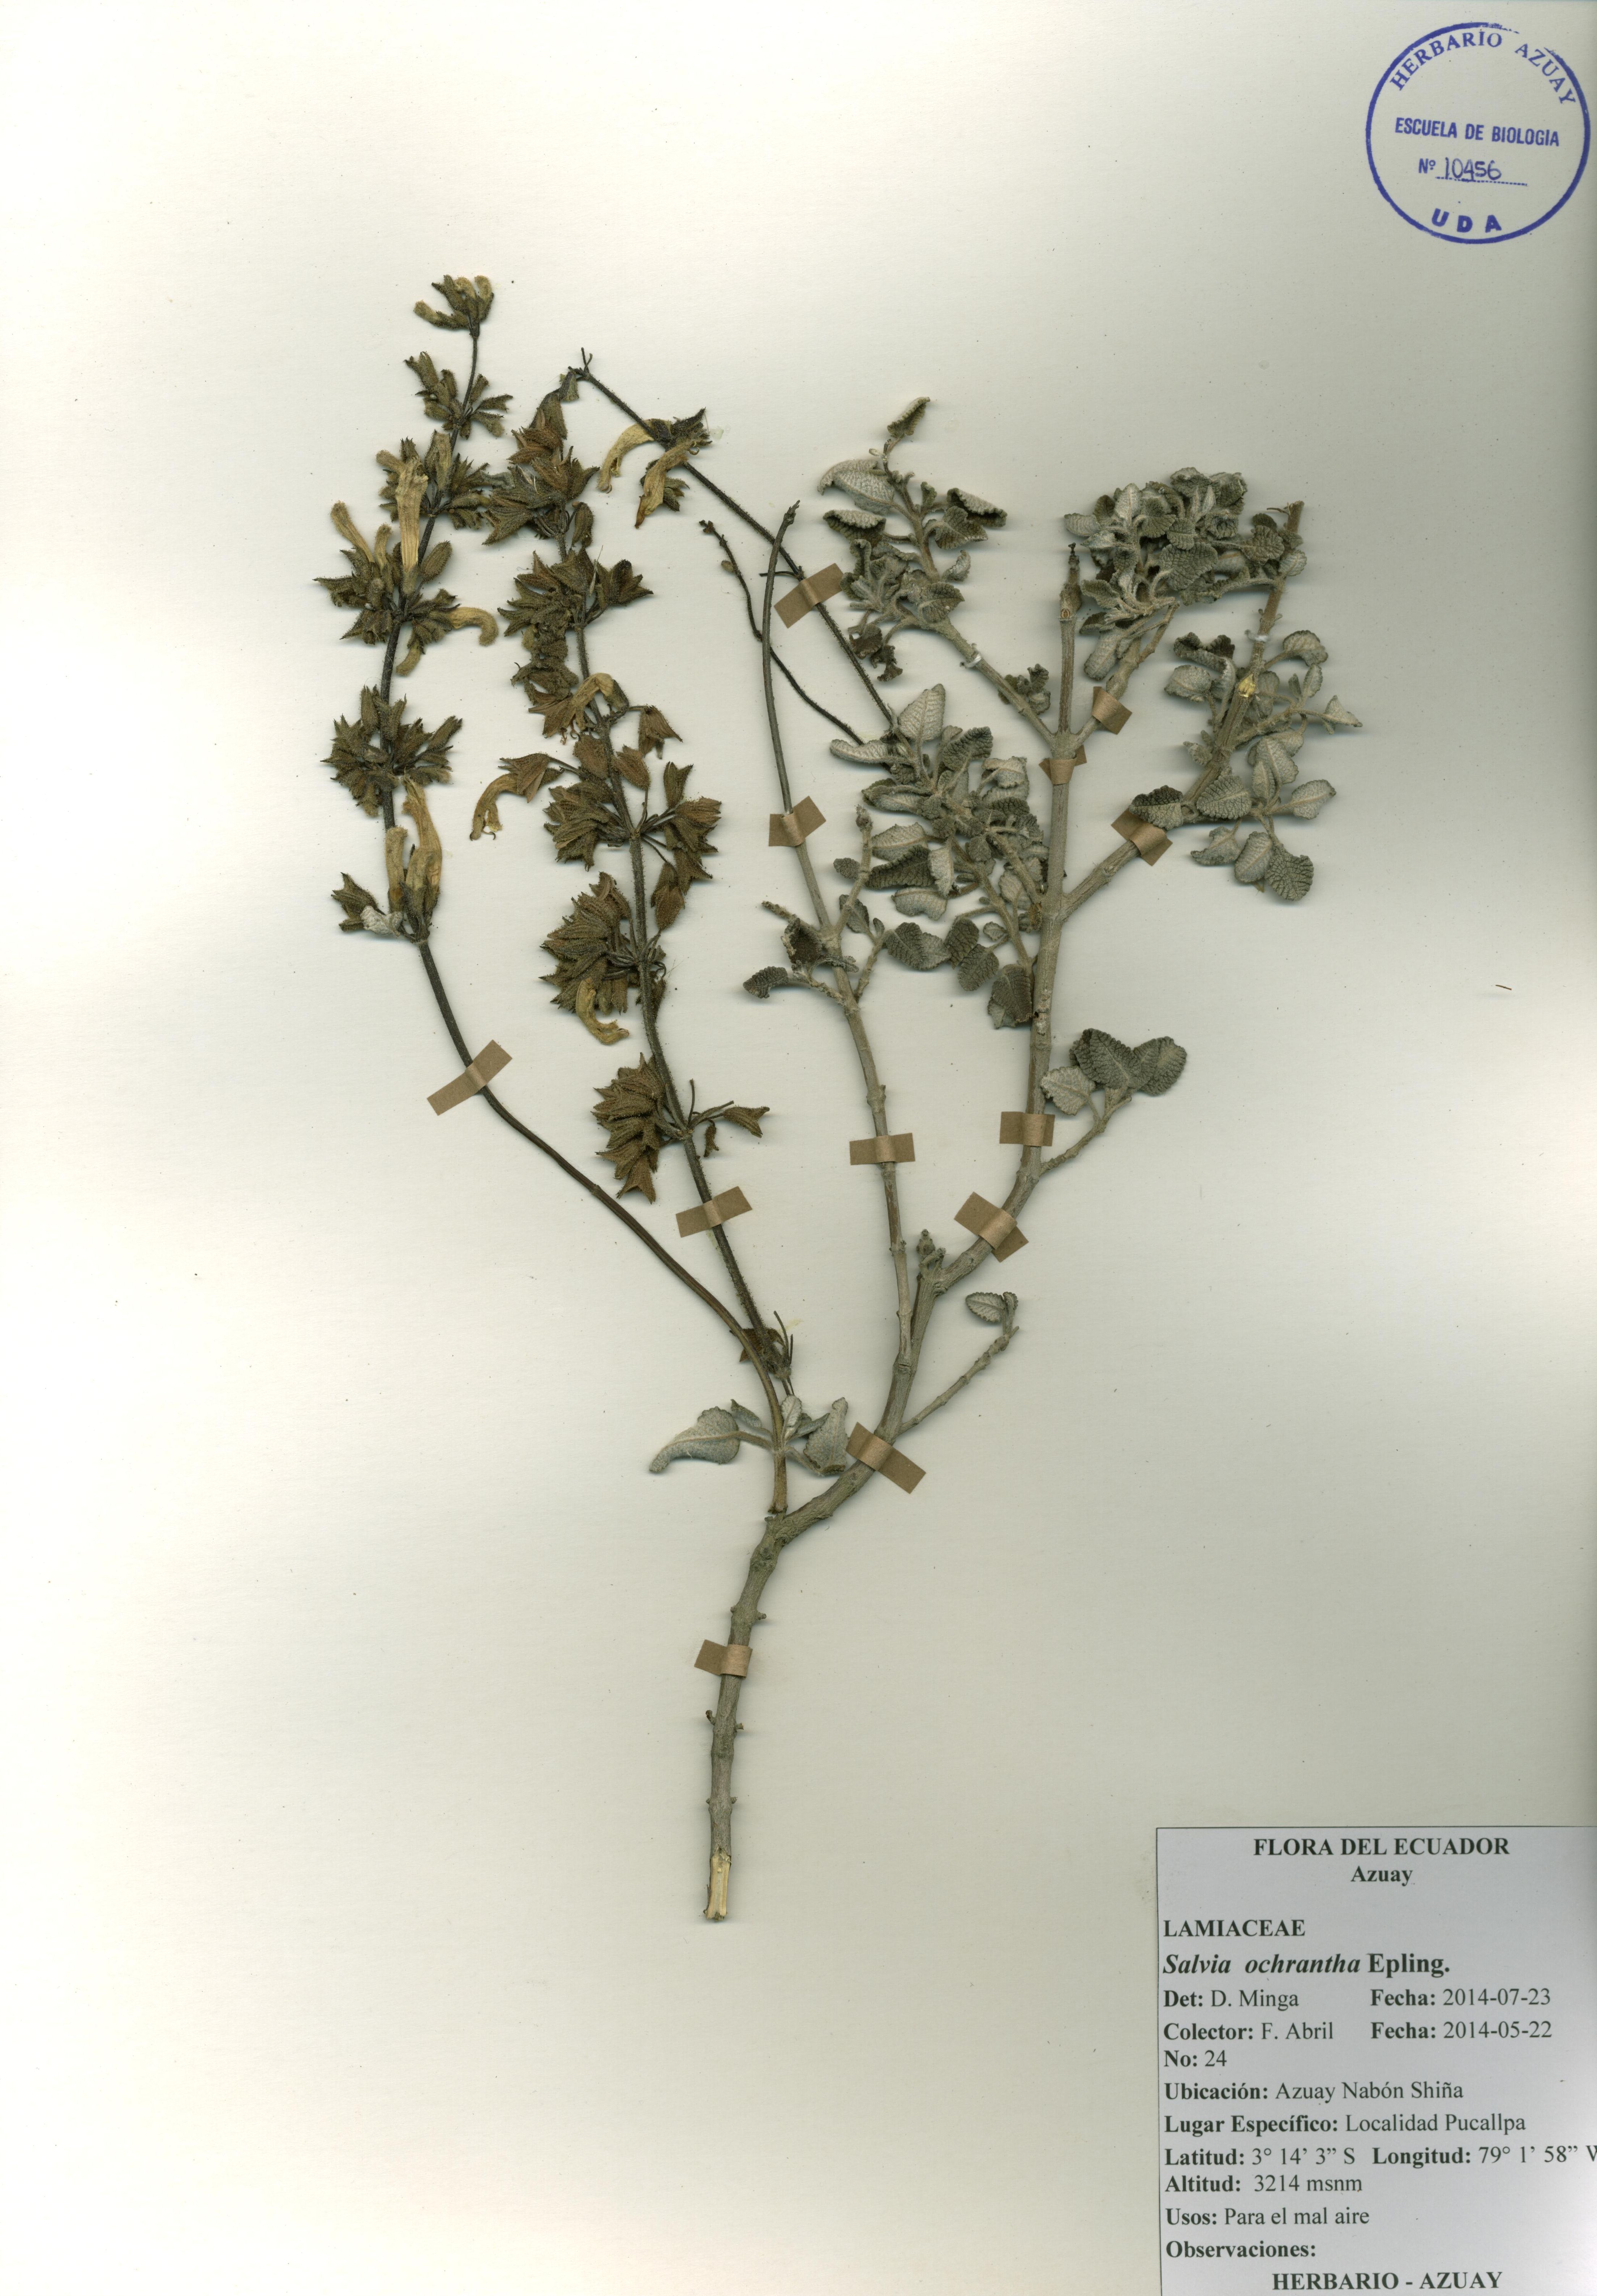 Salvia ochrantha Epling